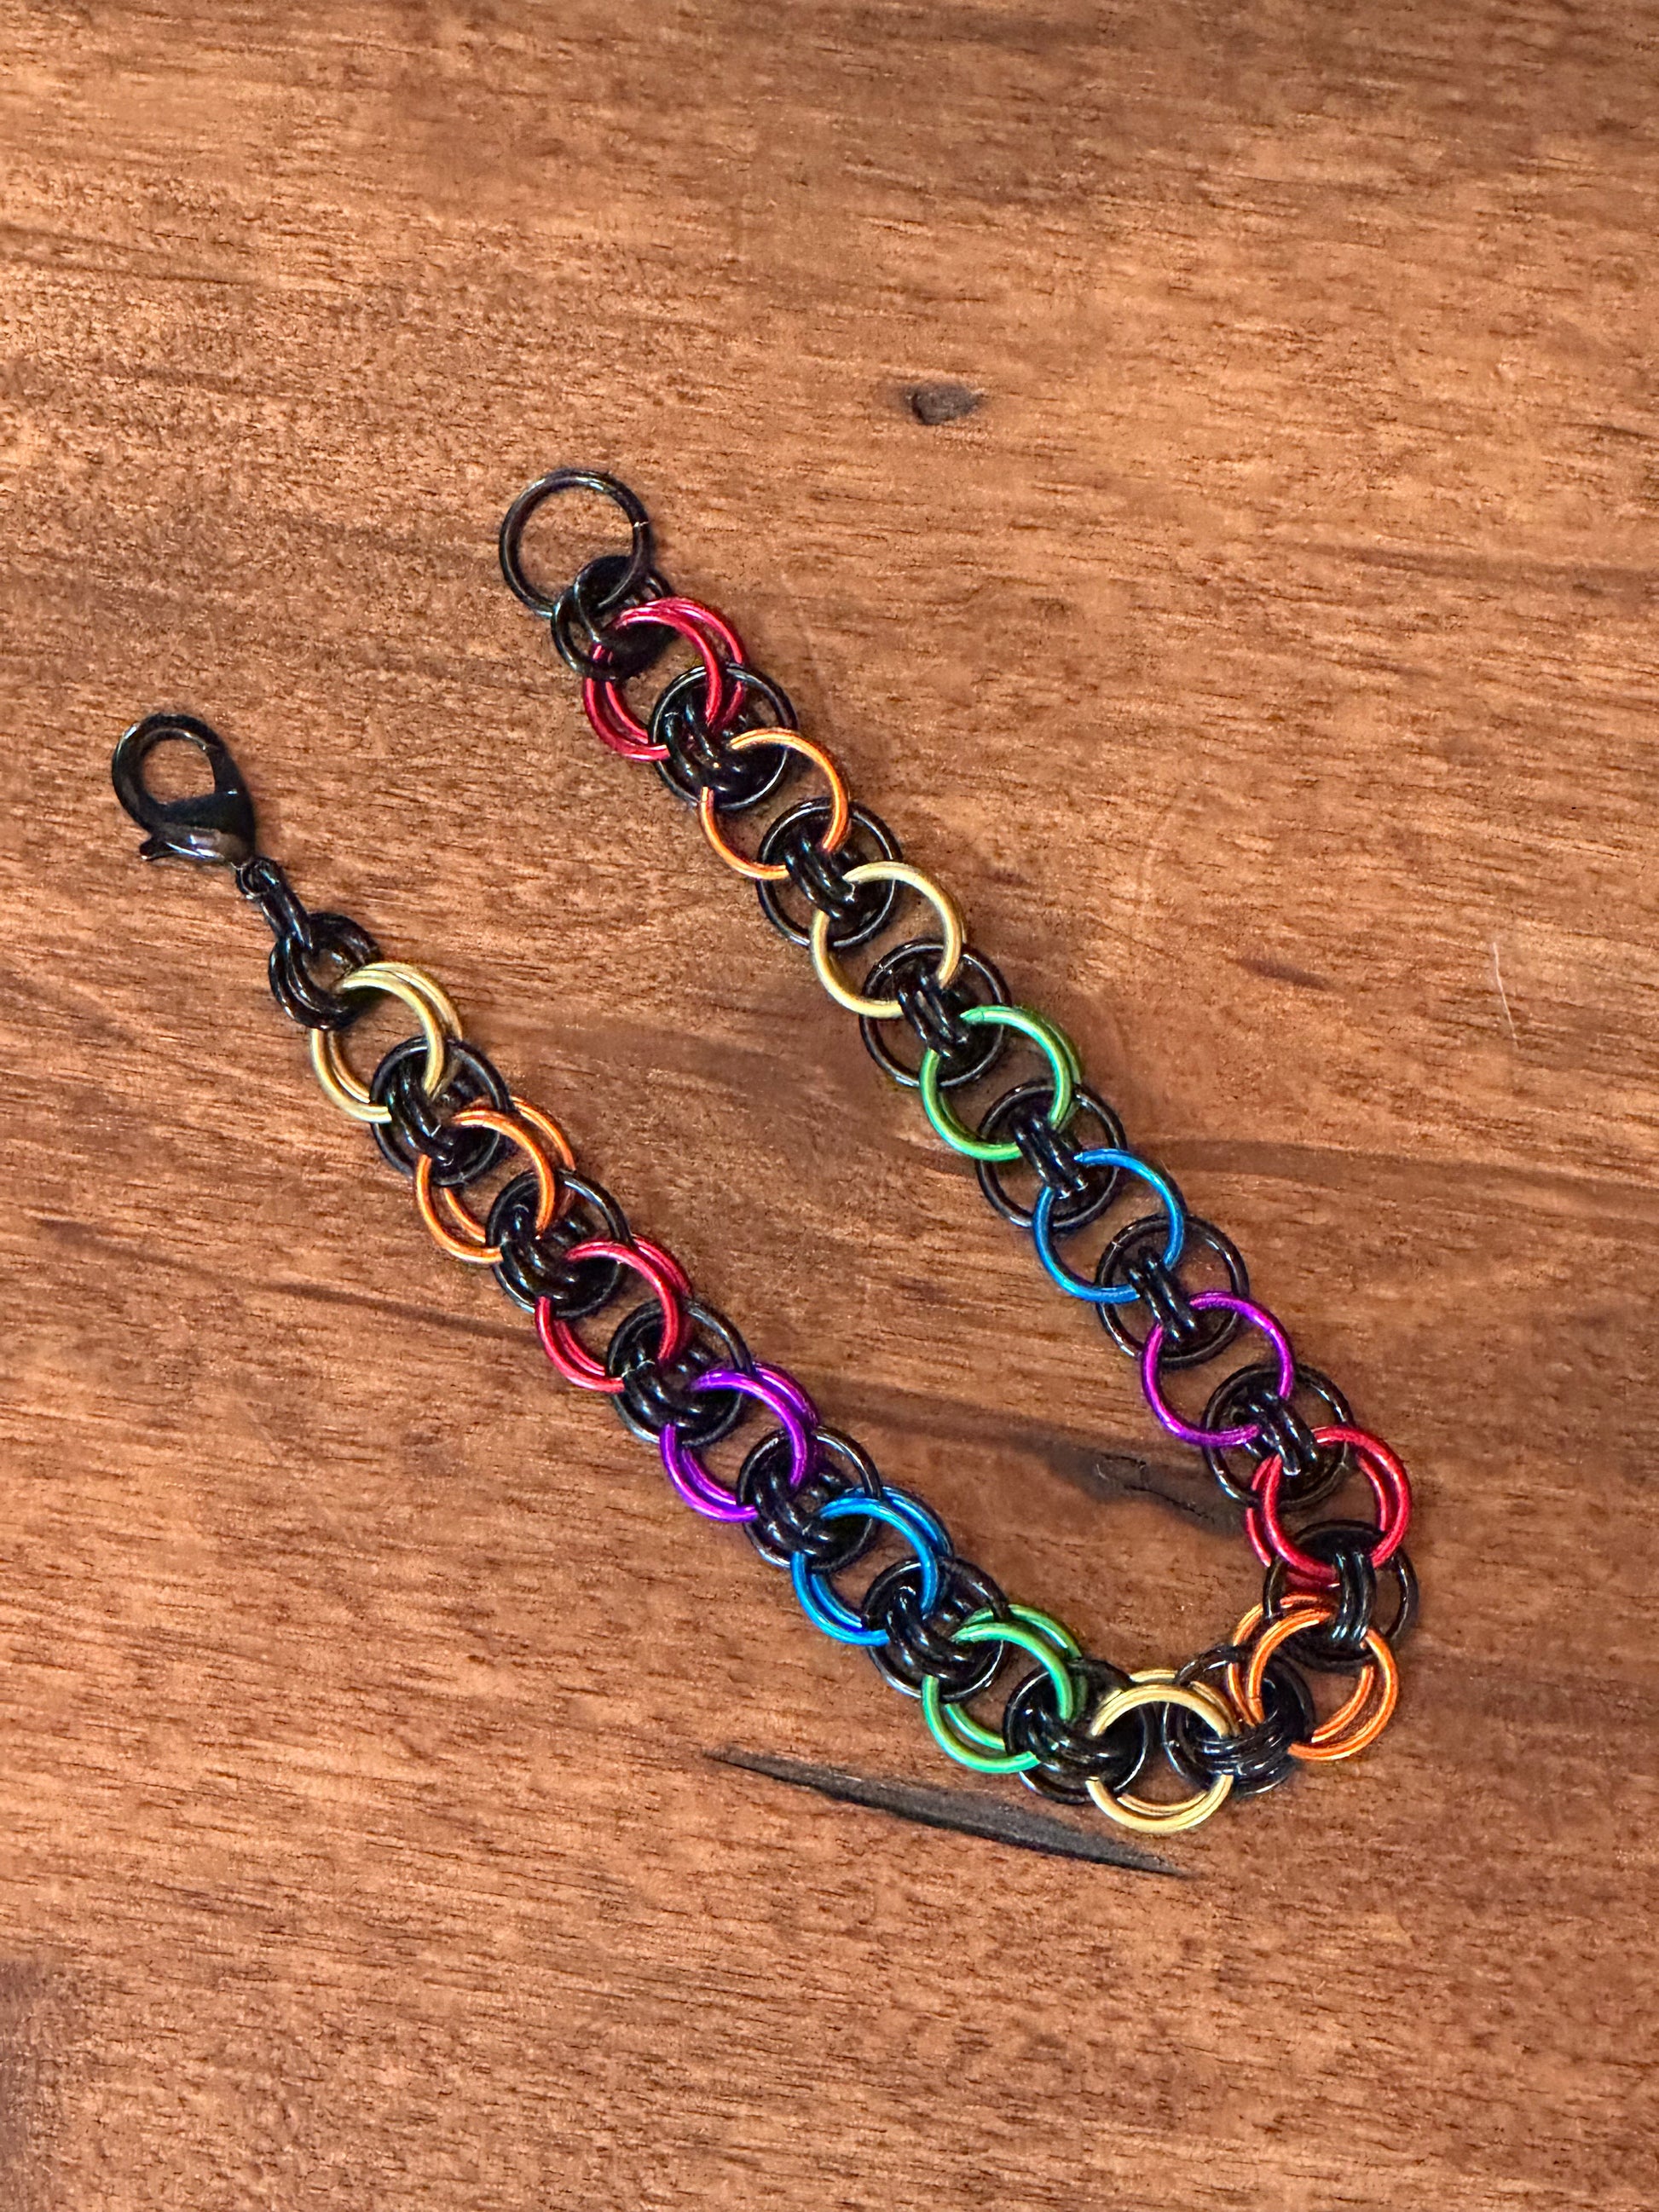 Helm Weave Rainbow Chain Maille Bracelet - Bonfire Baja Hoodies